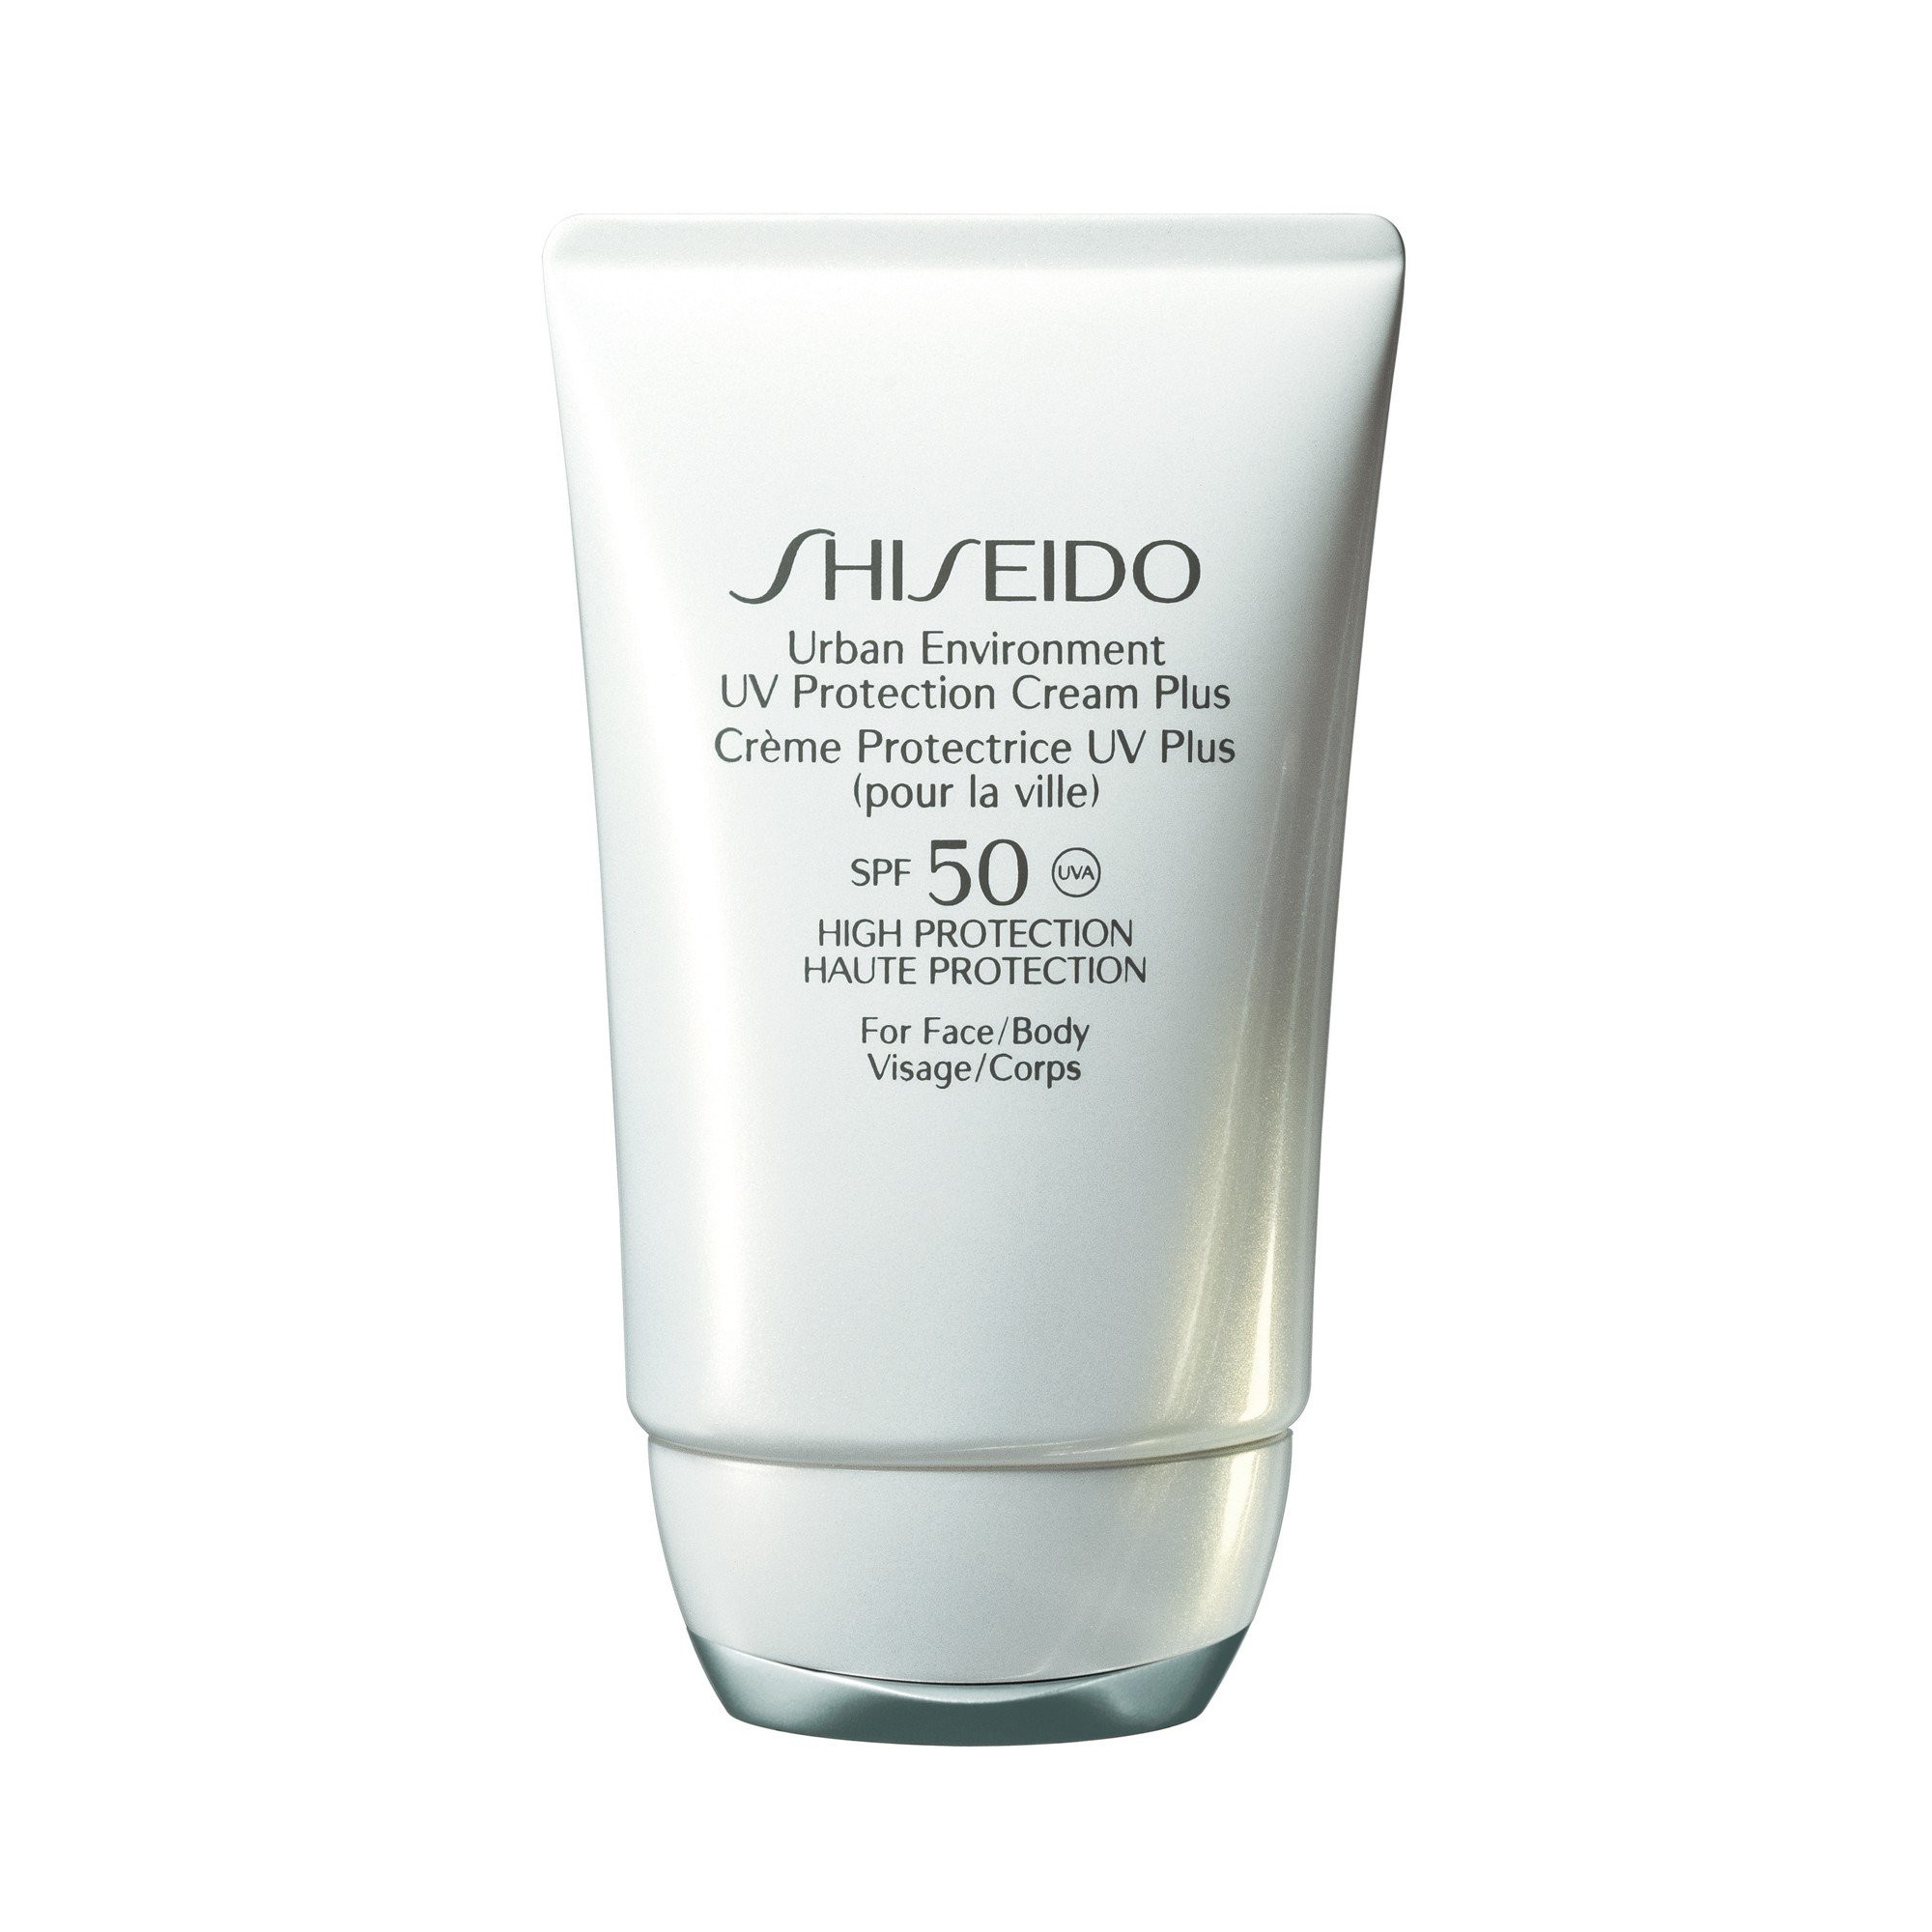 urban-environment-uv-protection-spf-50-shiseido.jpg